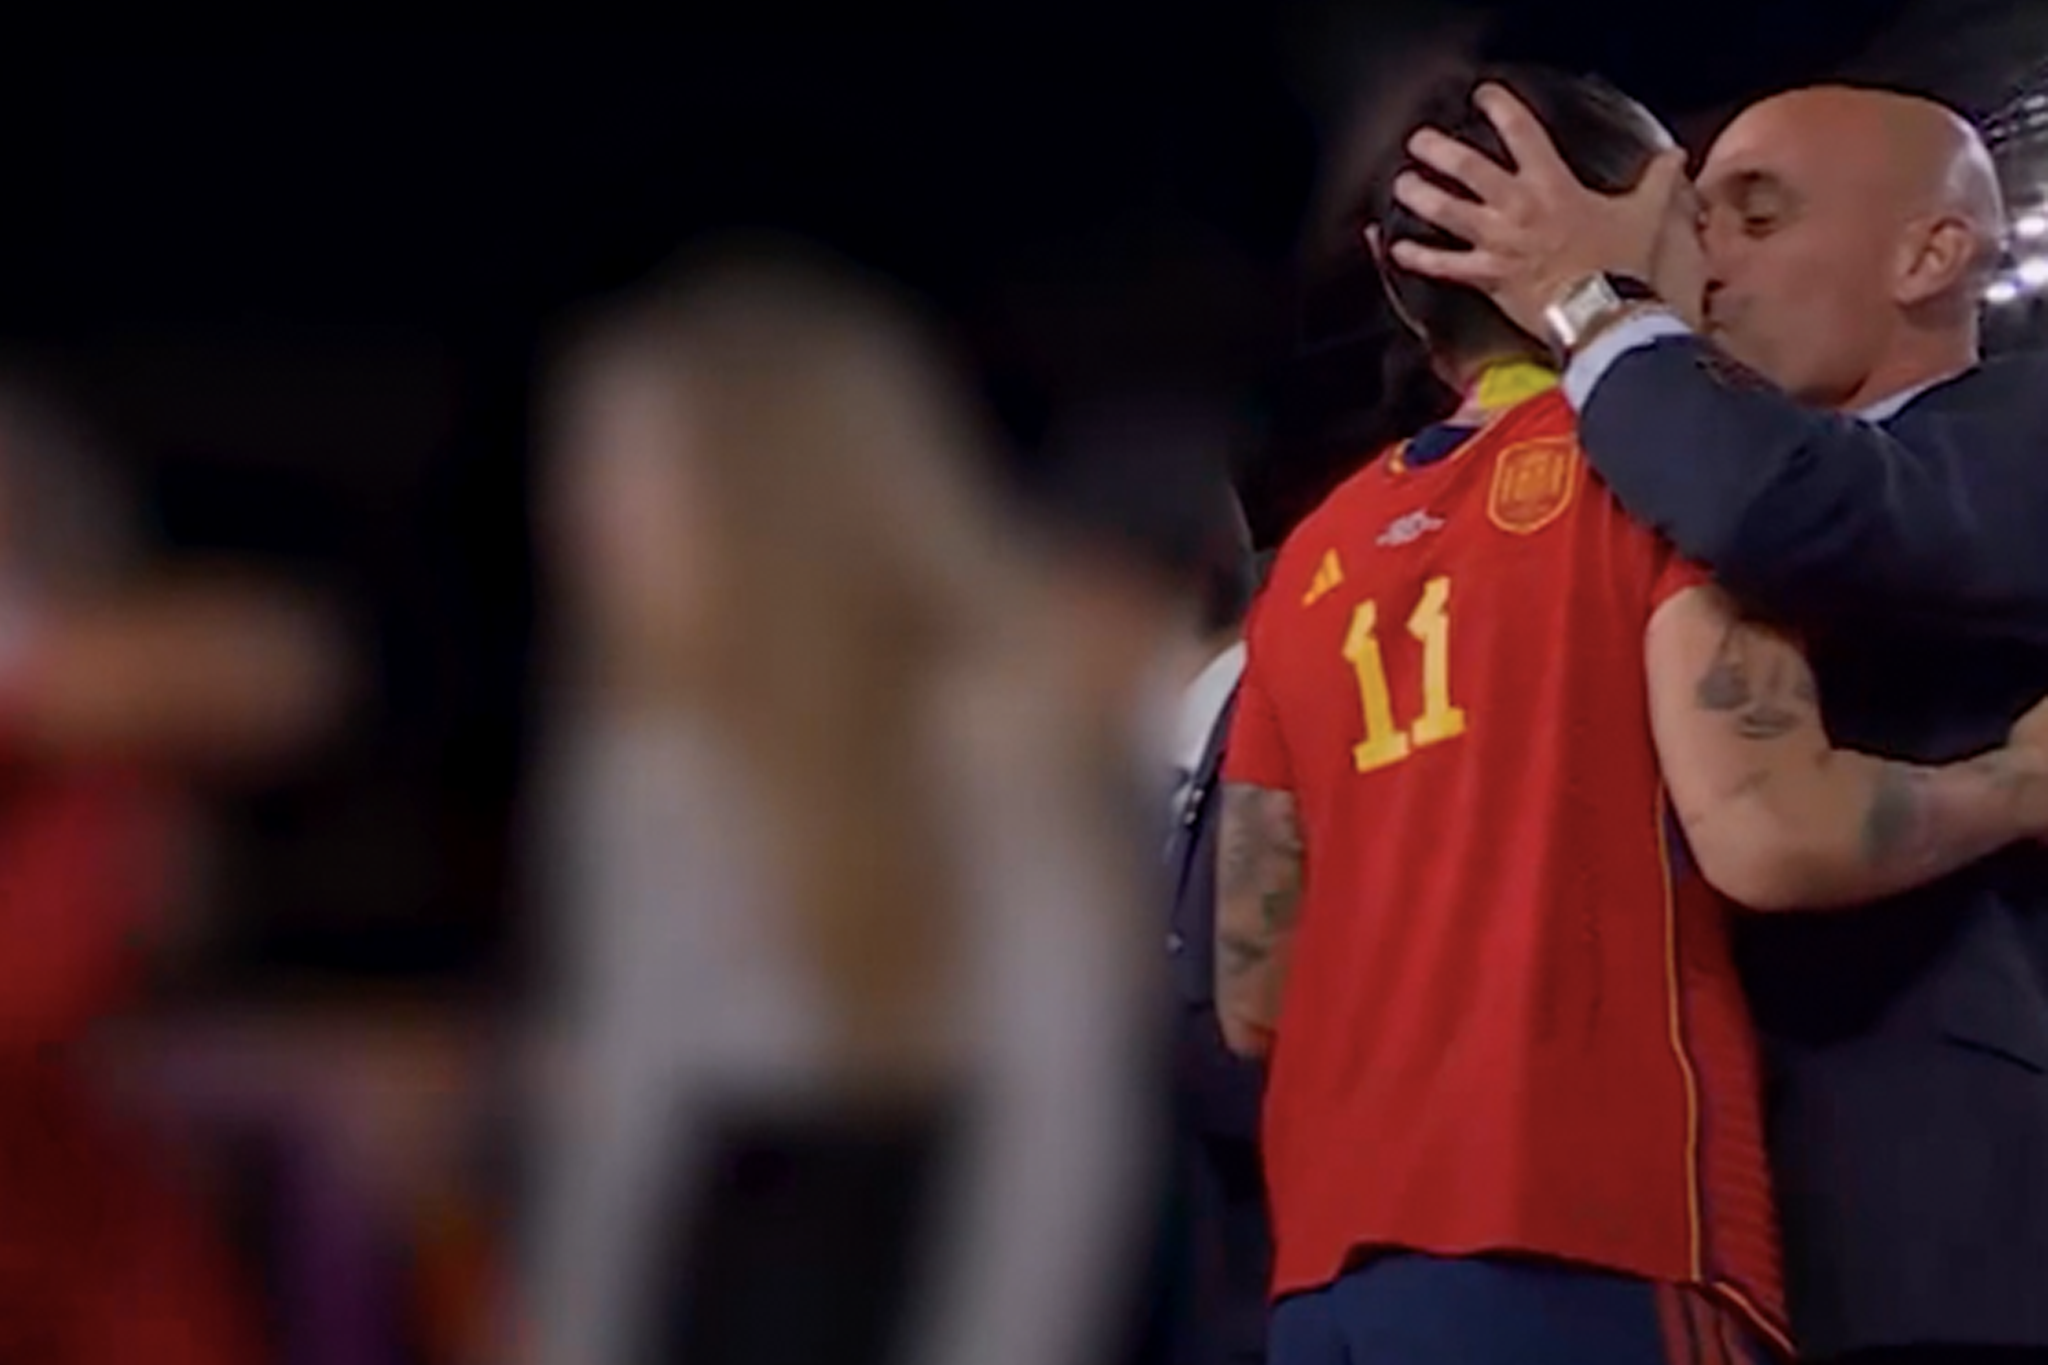 The moment FA Spanish president Rubiales kisses footballer Jenni Hermoso